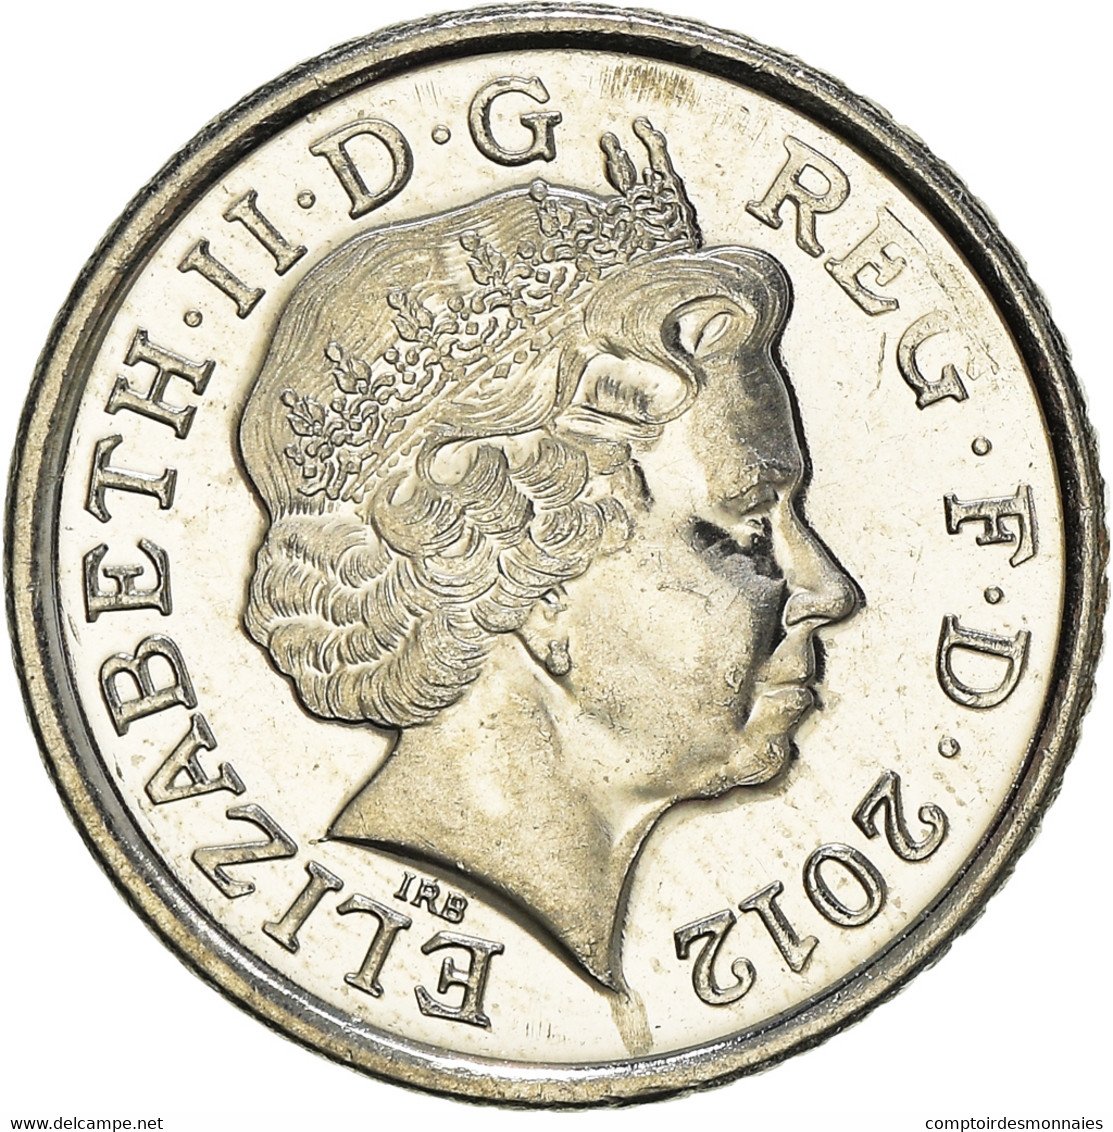 Monnaie, Grande-Bretagne, 5 Pence, 2012 - 5 Pence & 5 New Pence